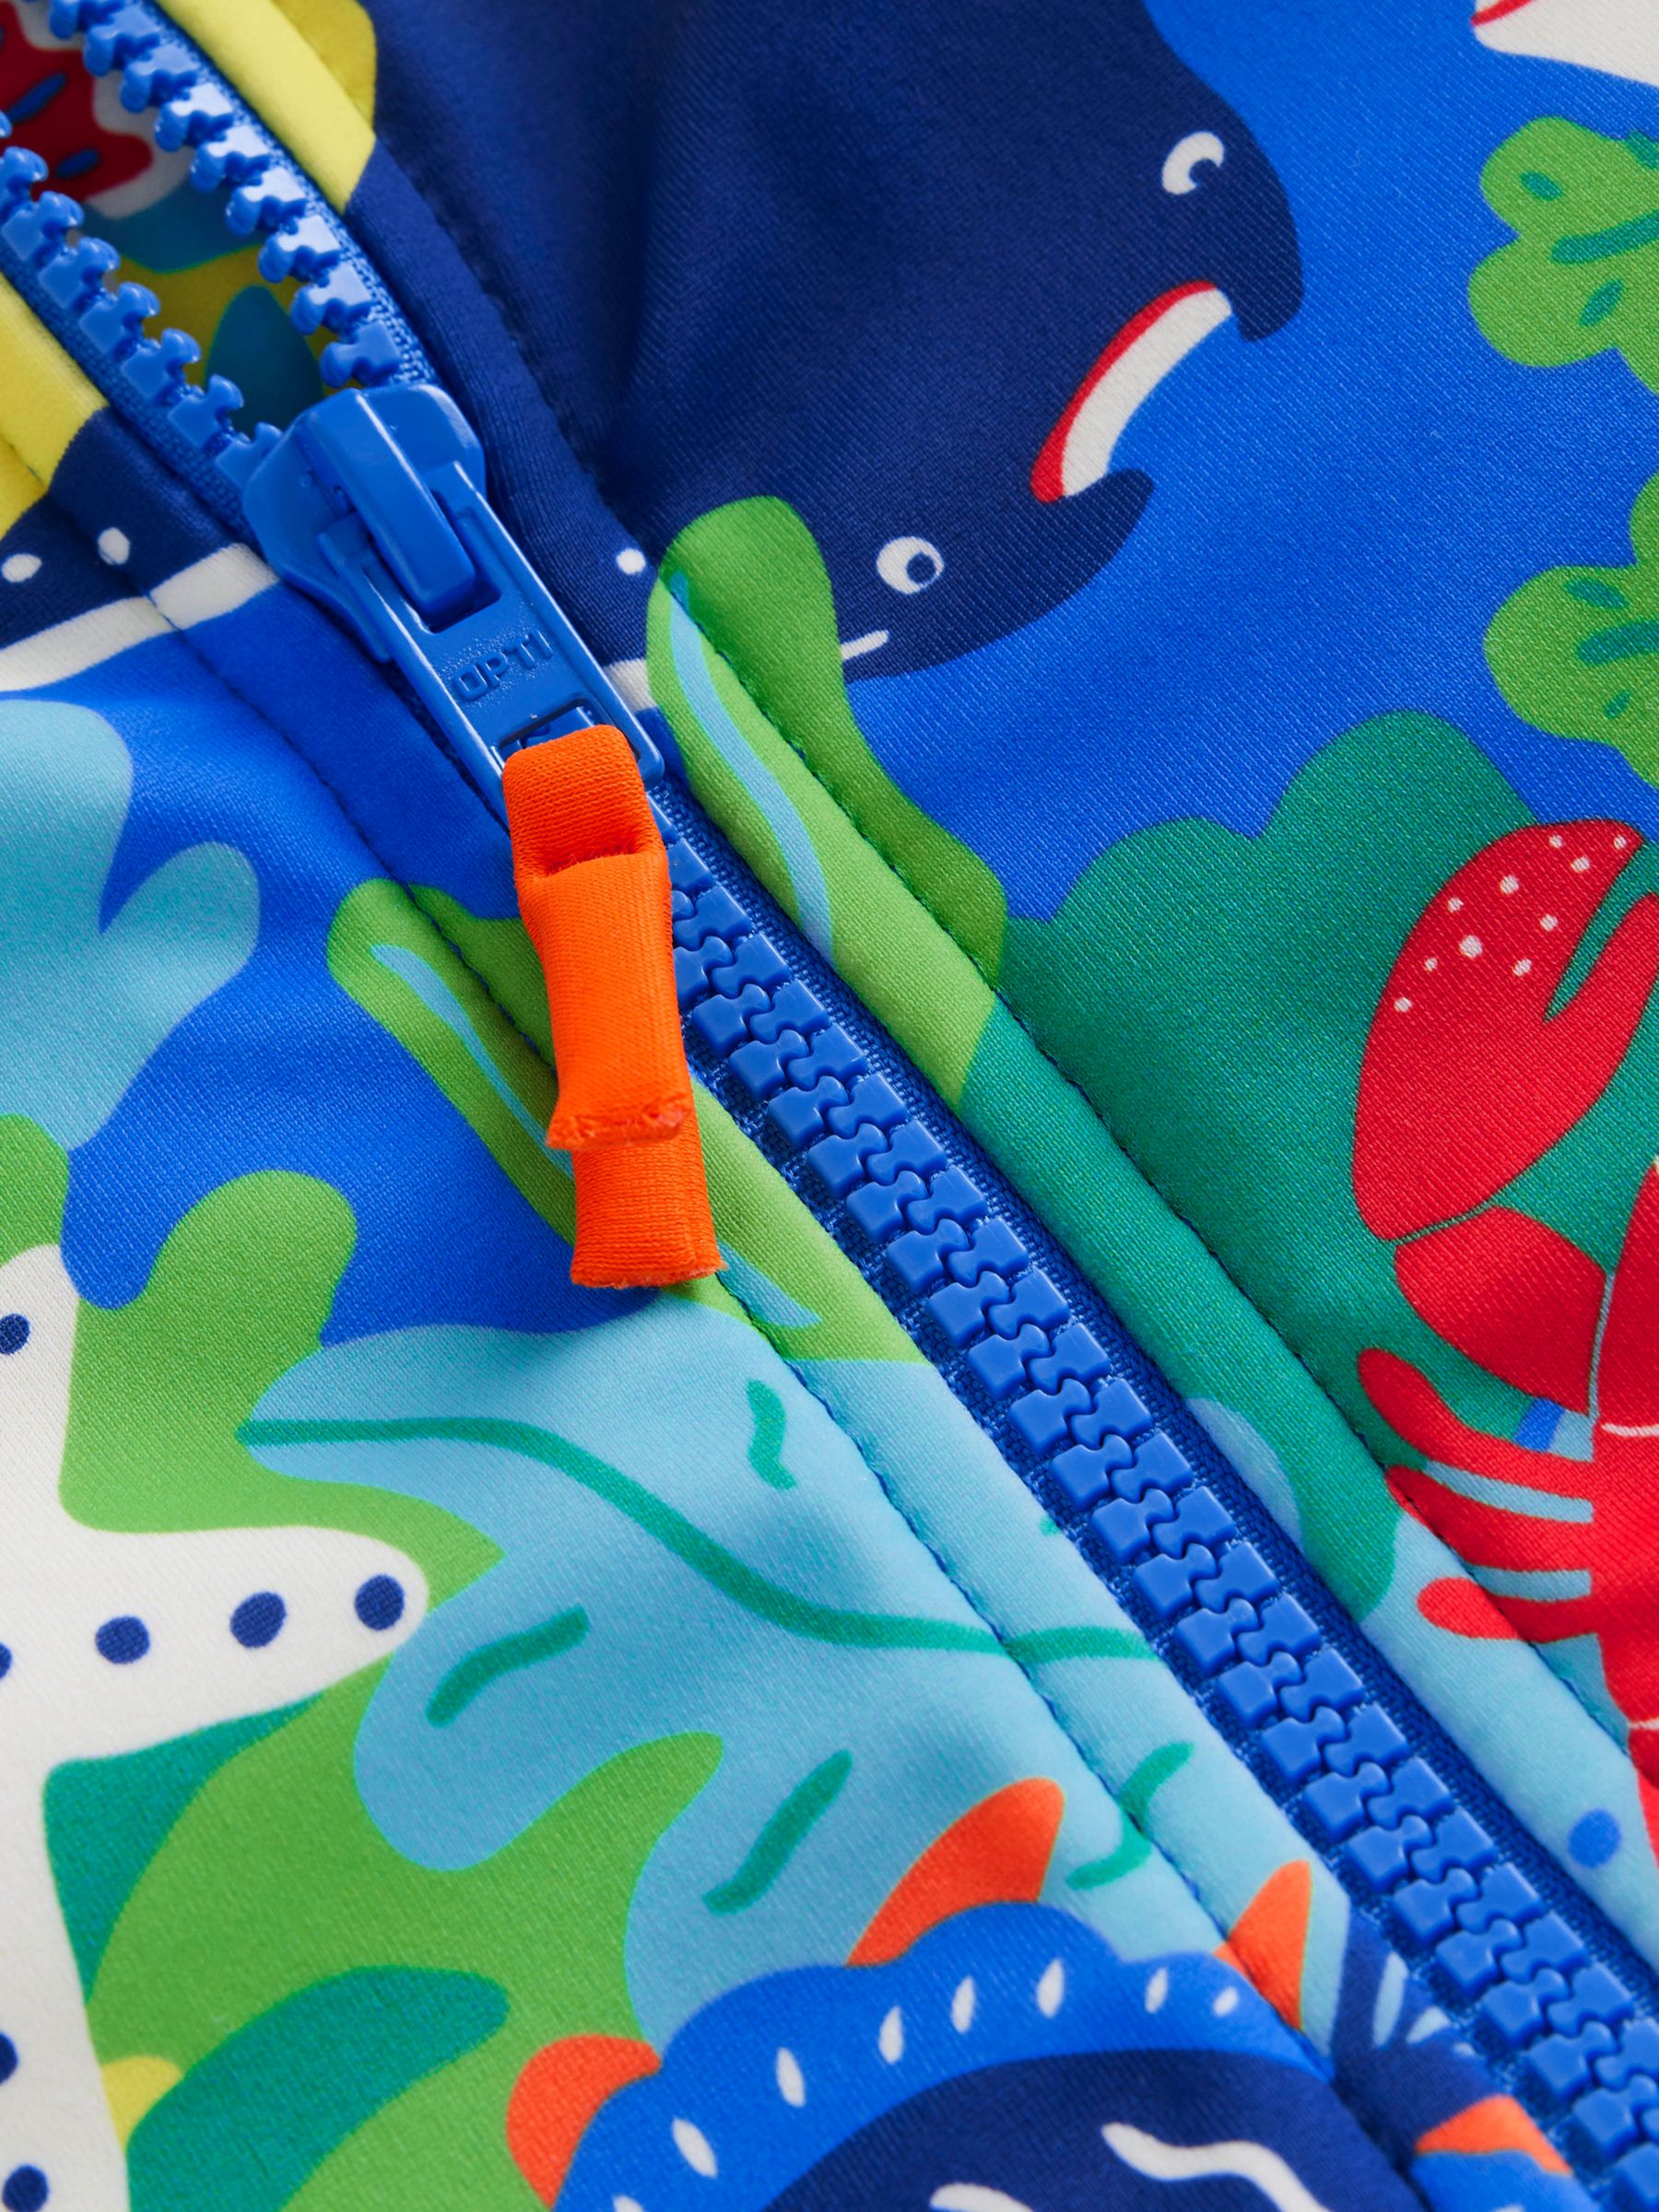 Buy Mini Boden Kids' Rainbow Reef Print Short Sleeve High Neck Swimsuit, Multi Online at johnlewis.com